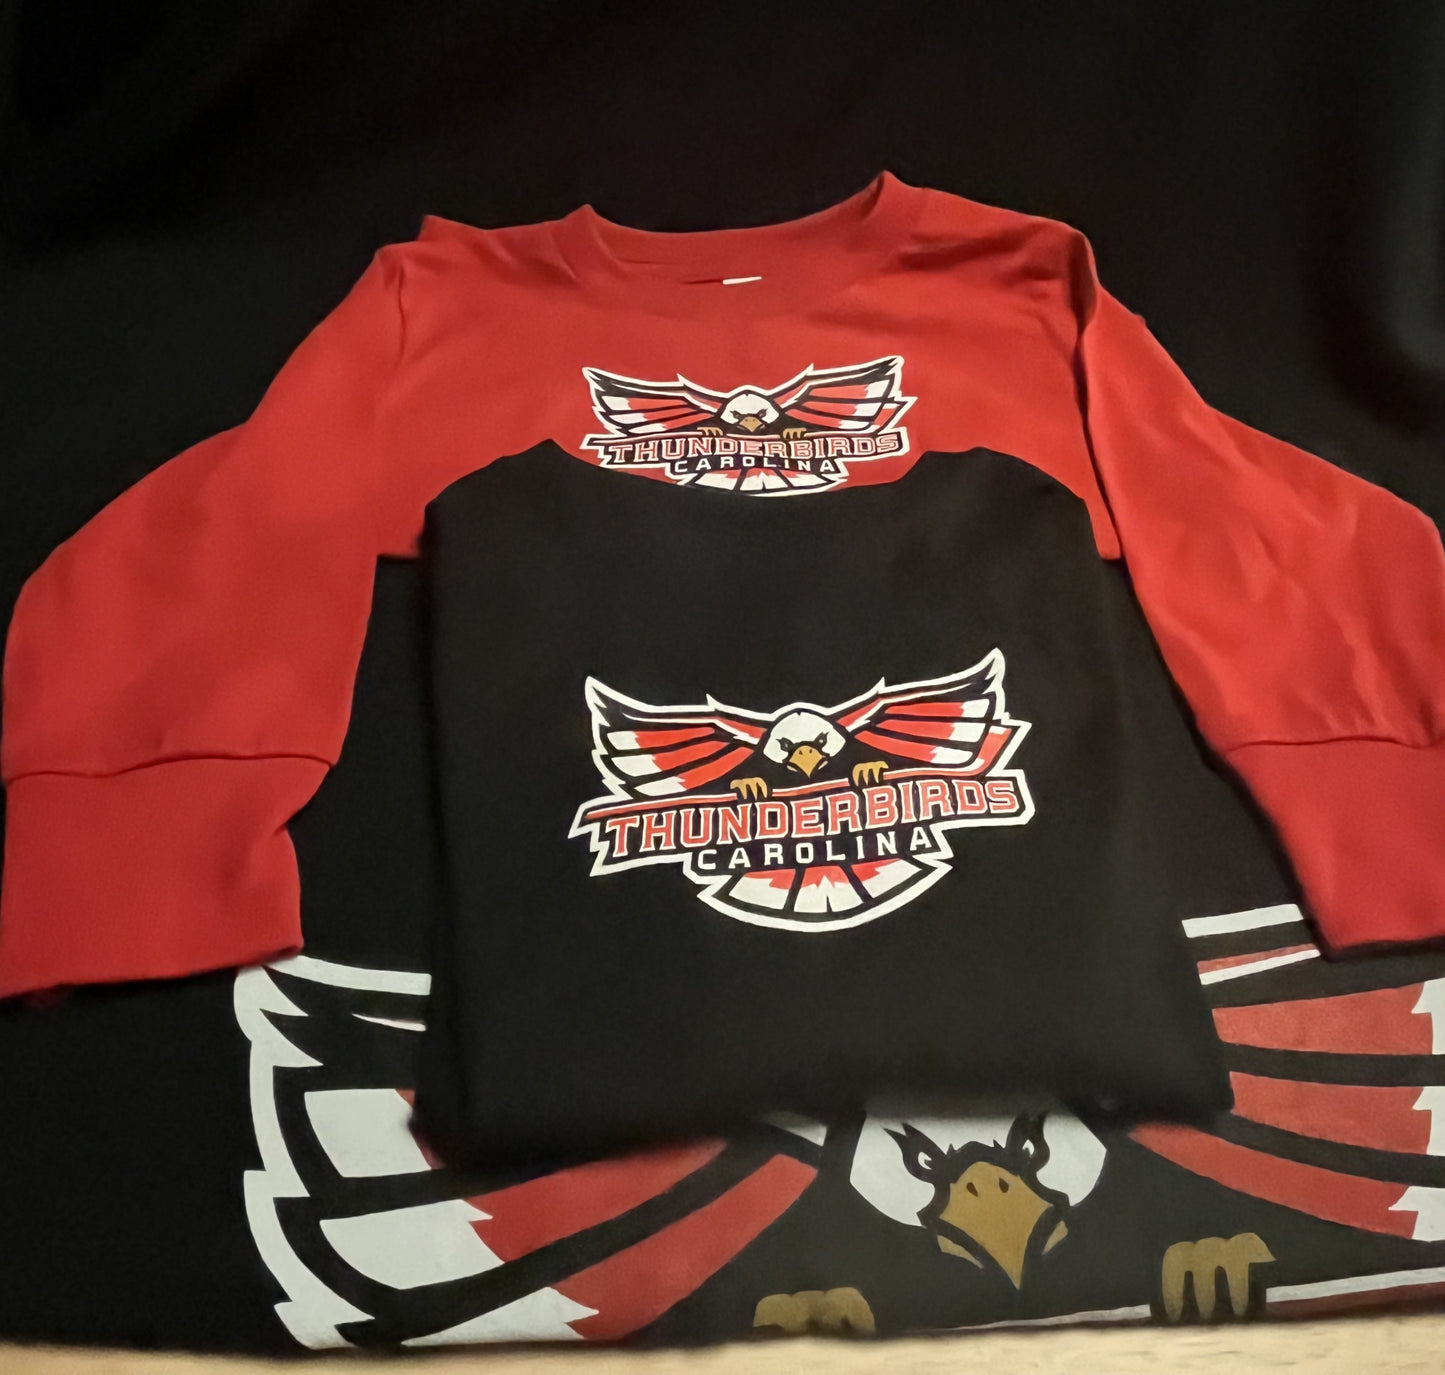 Toddler Black - Long Sleeves W/Thunderbirds Logo - 3T